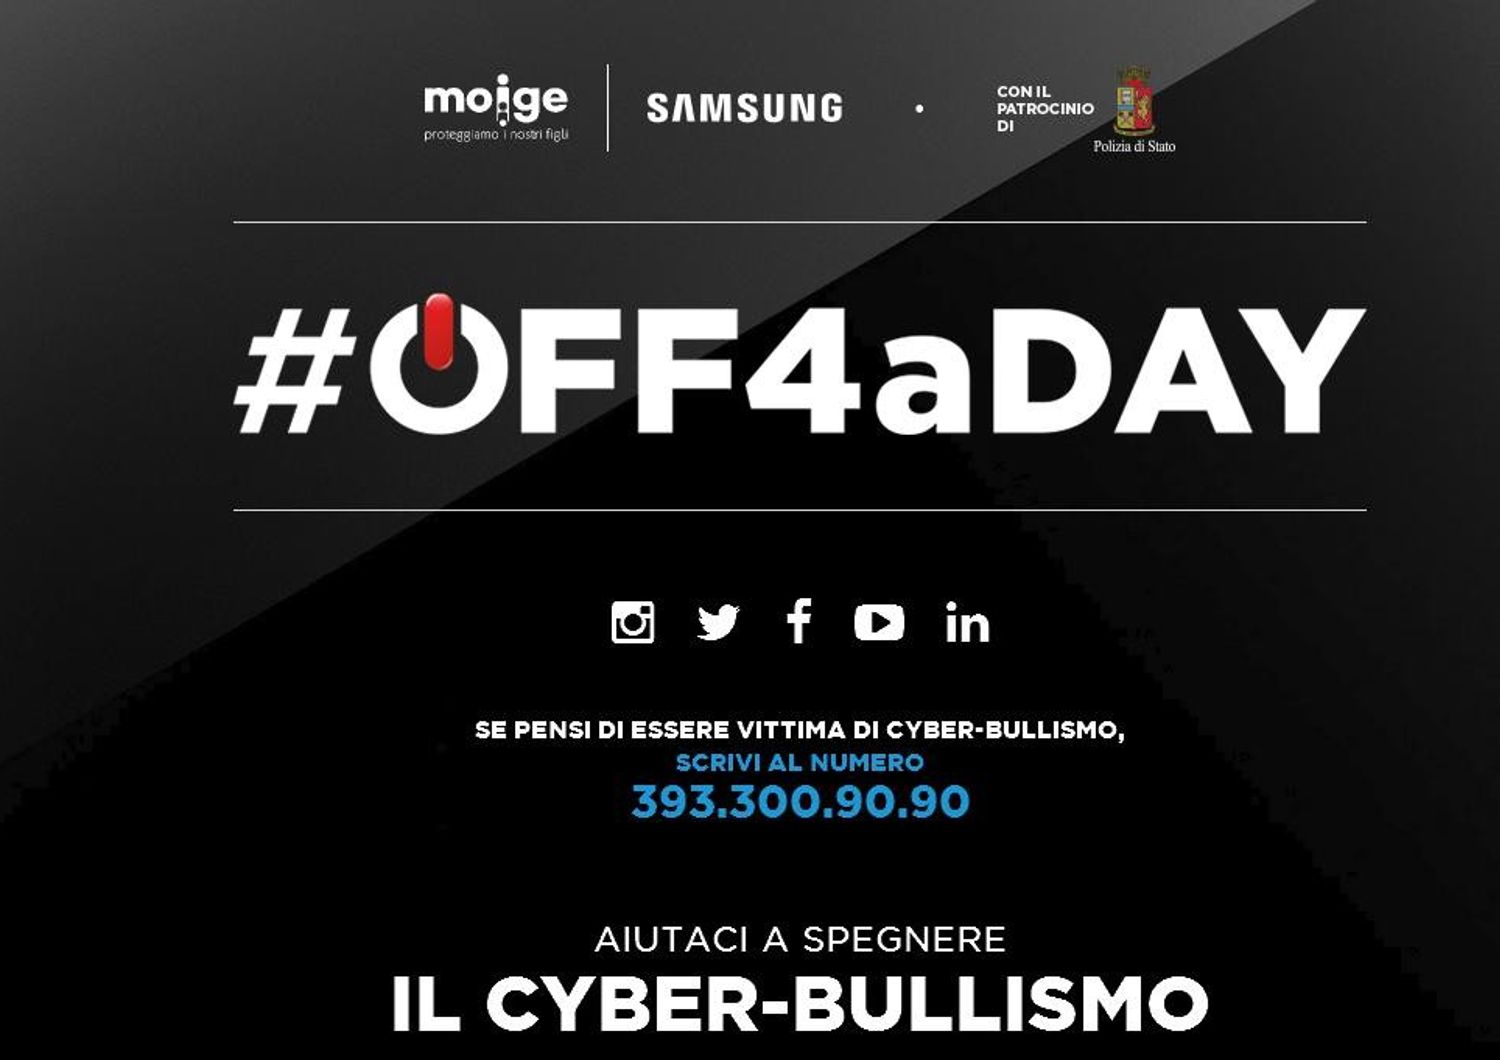 &nbsp;Samsung Miur Moige #OFF4aDAY cyberbullismo - sito